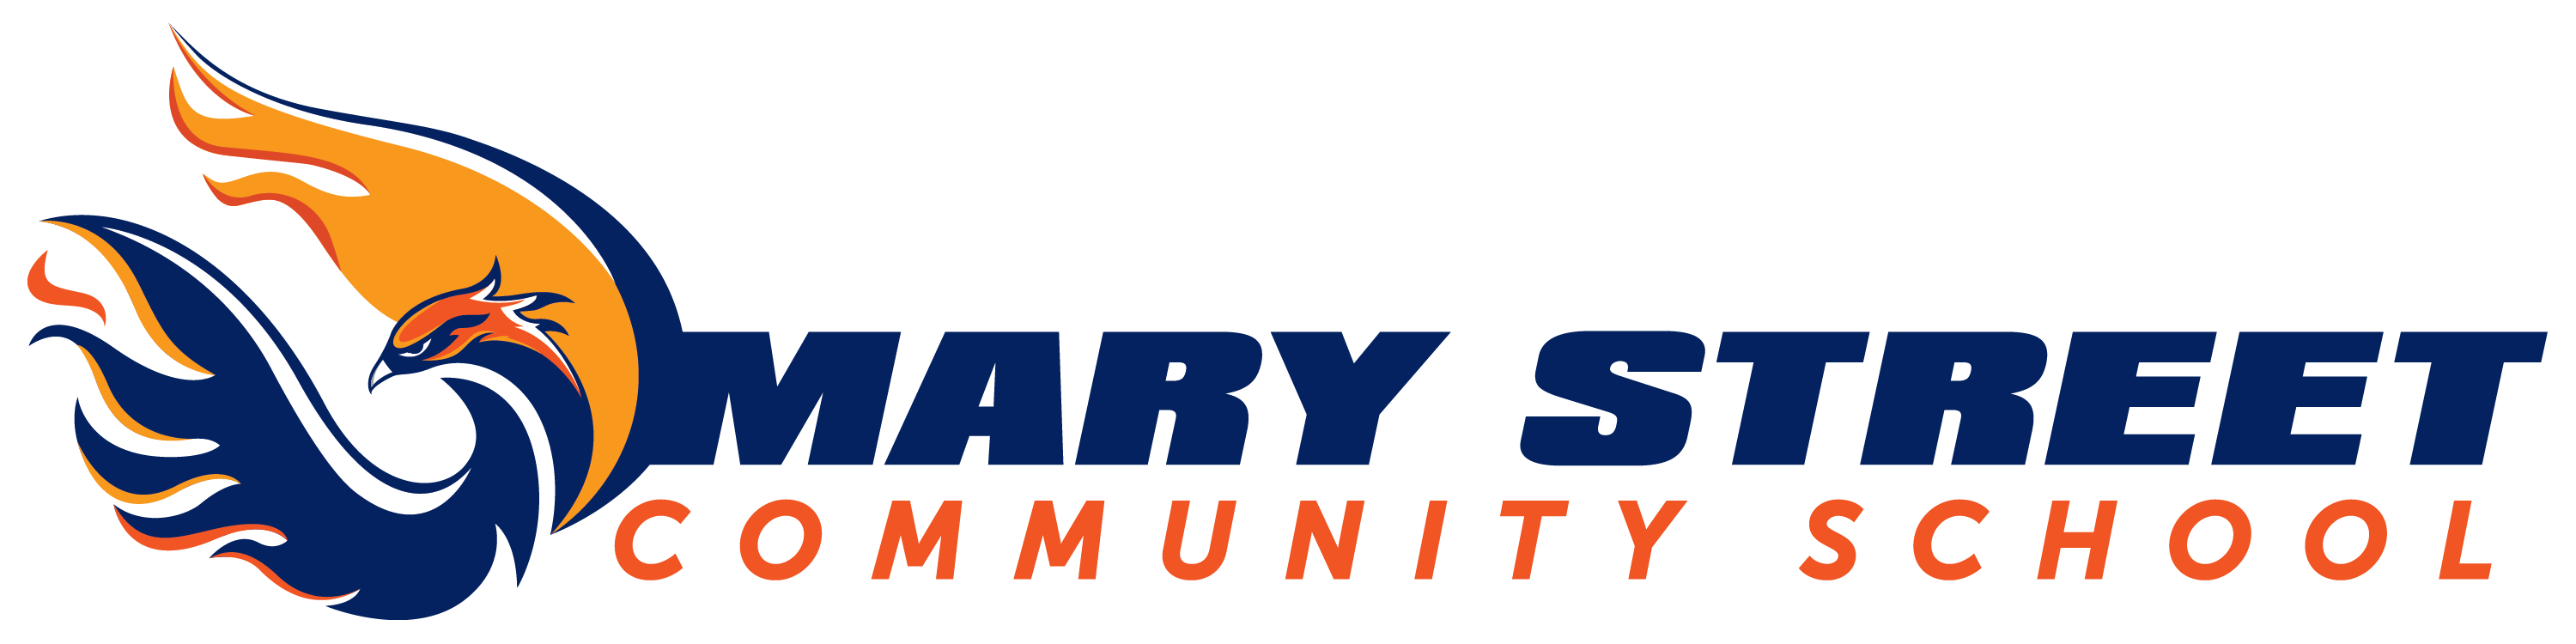 Mary Street Community School logo